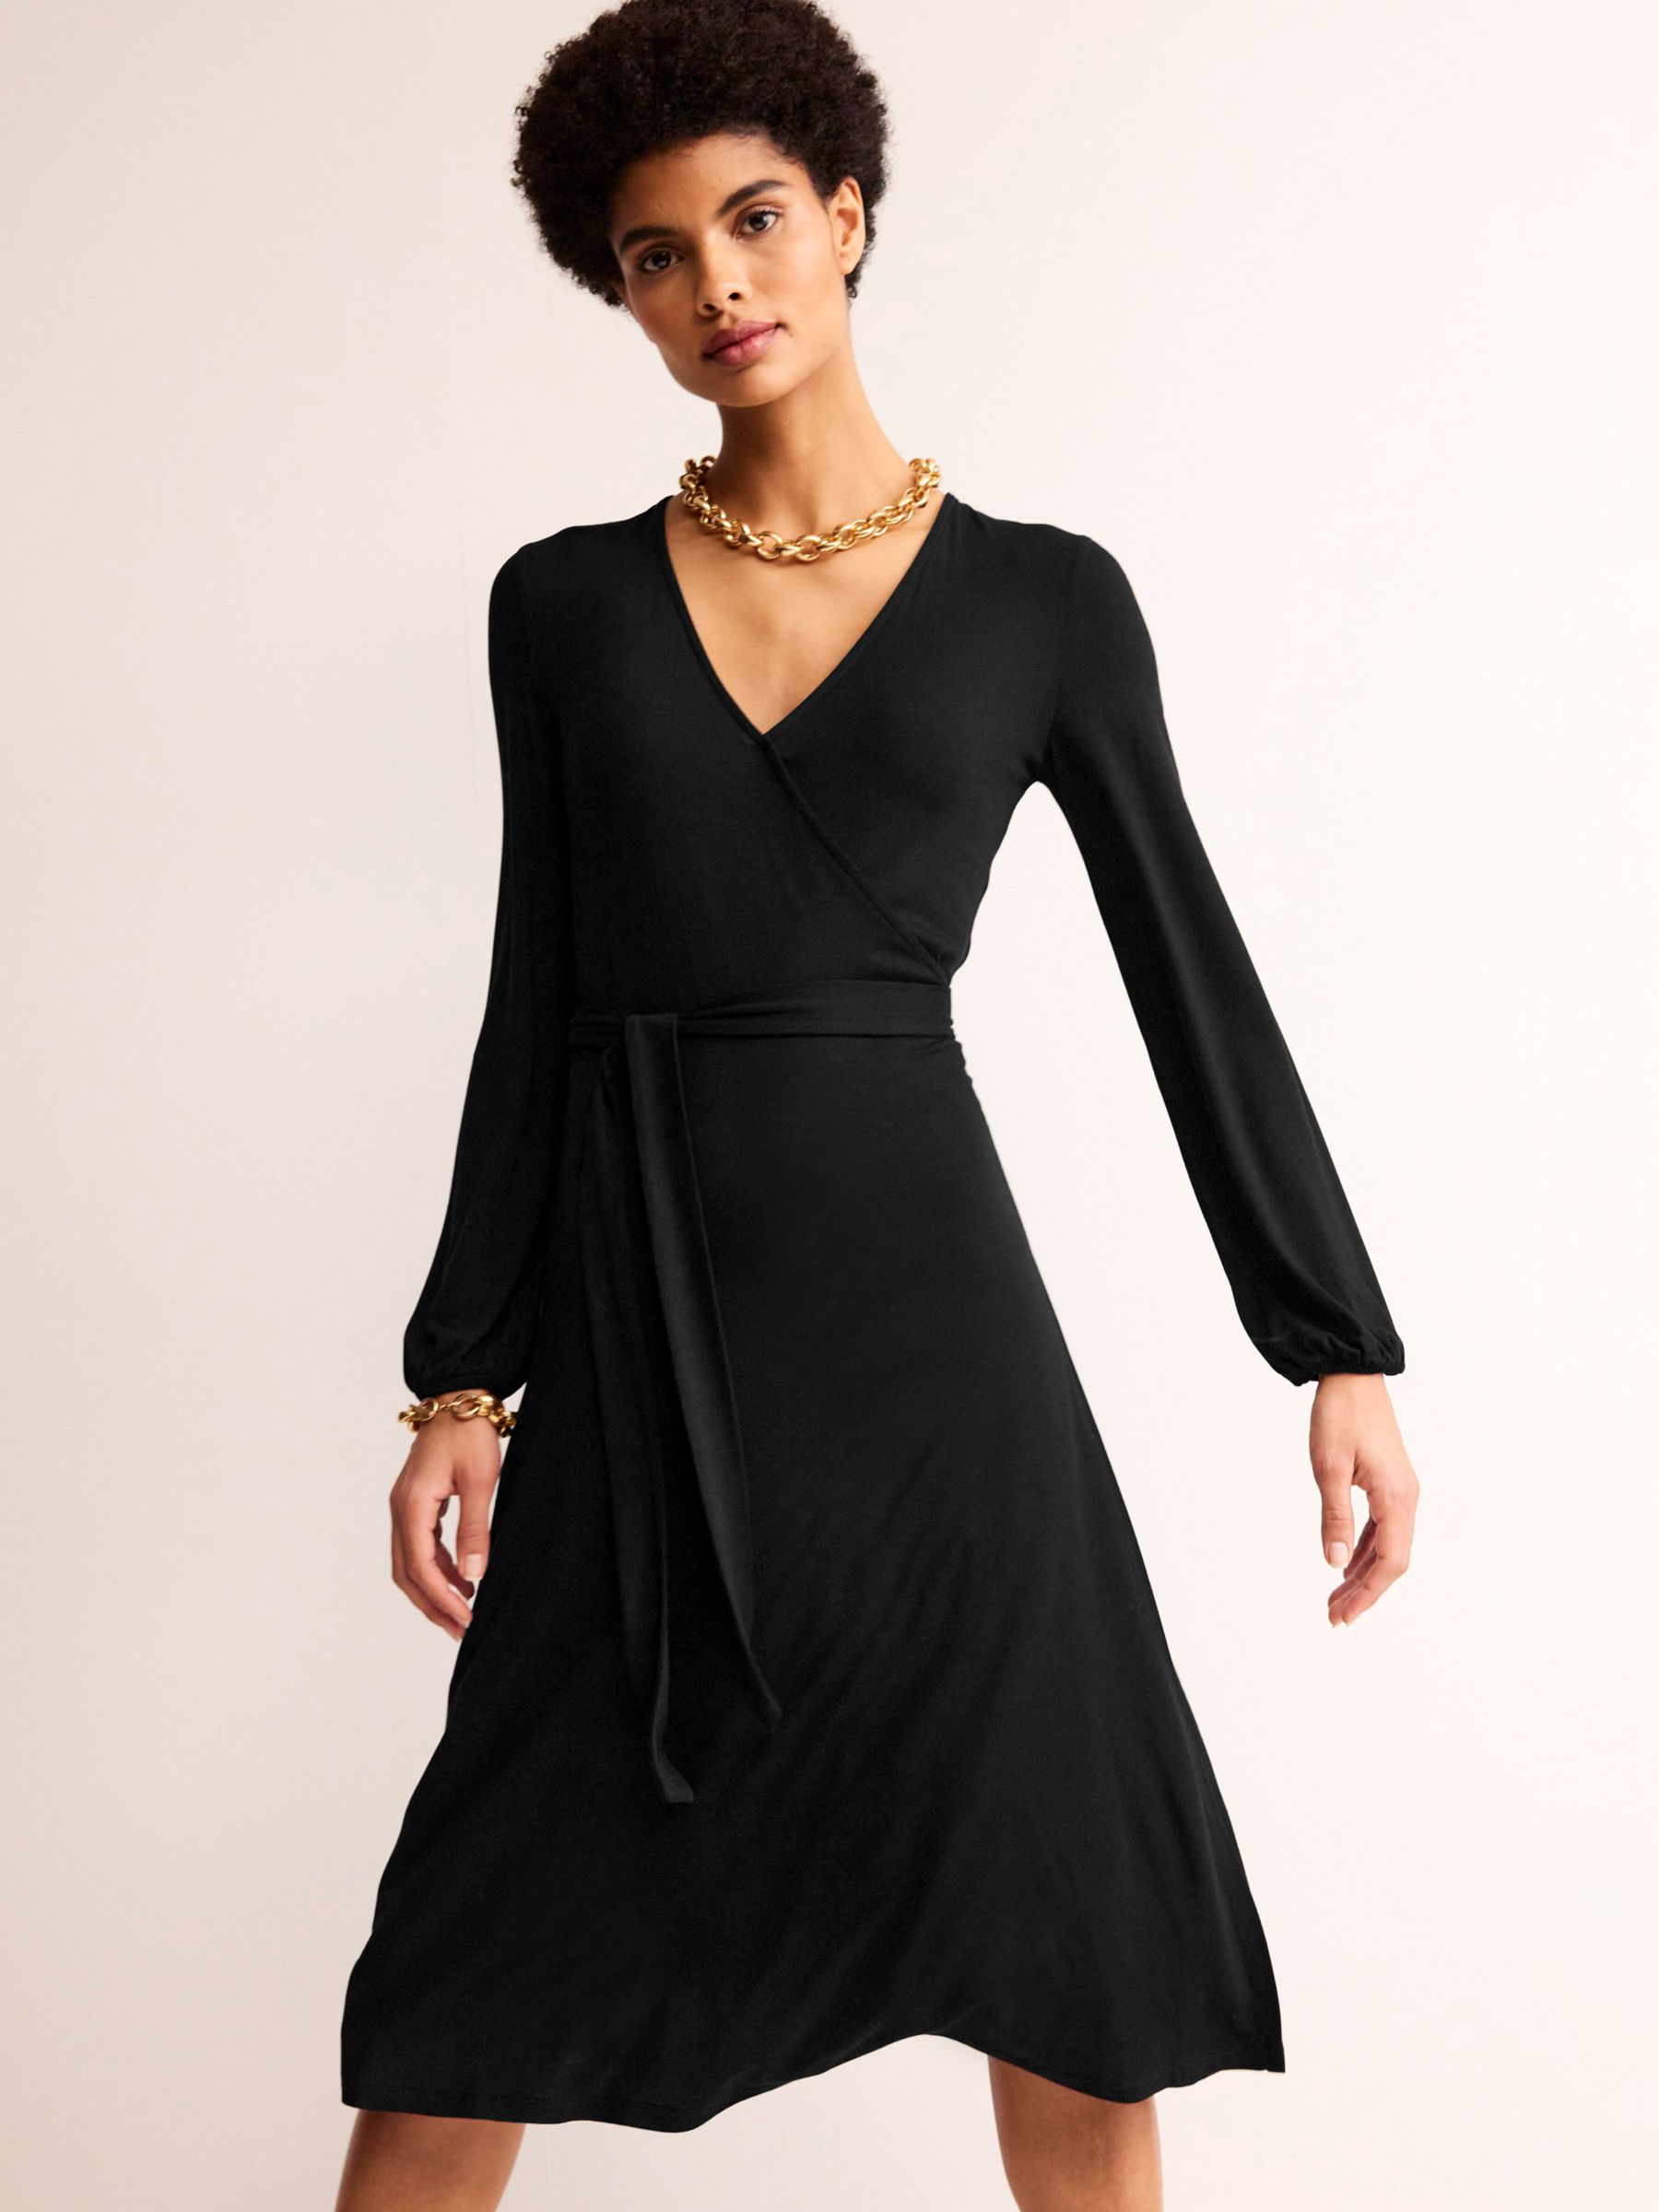 Boden Joanna Jersey Midi Wrap Dress, Black at John Lewis & Partners